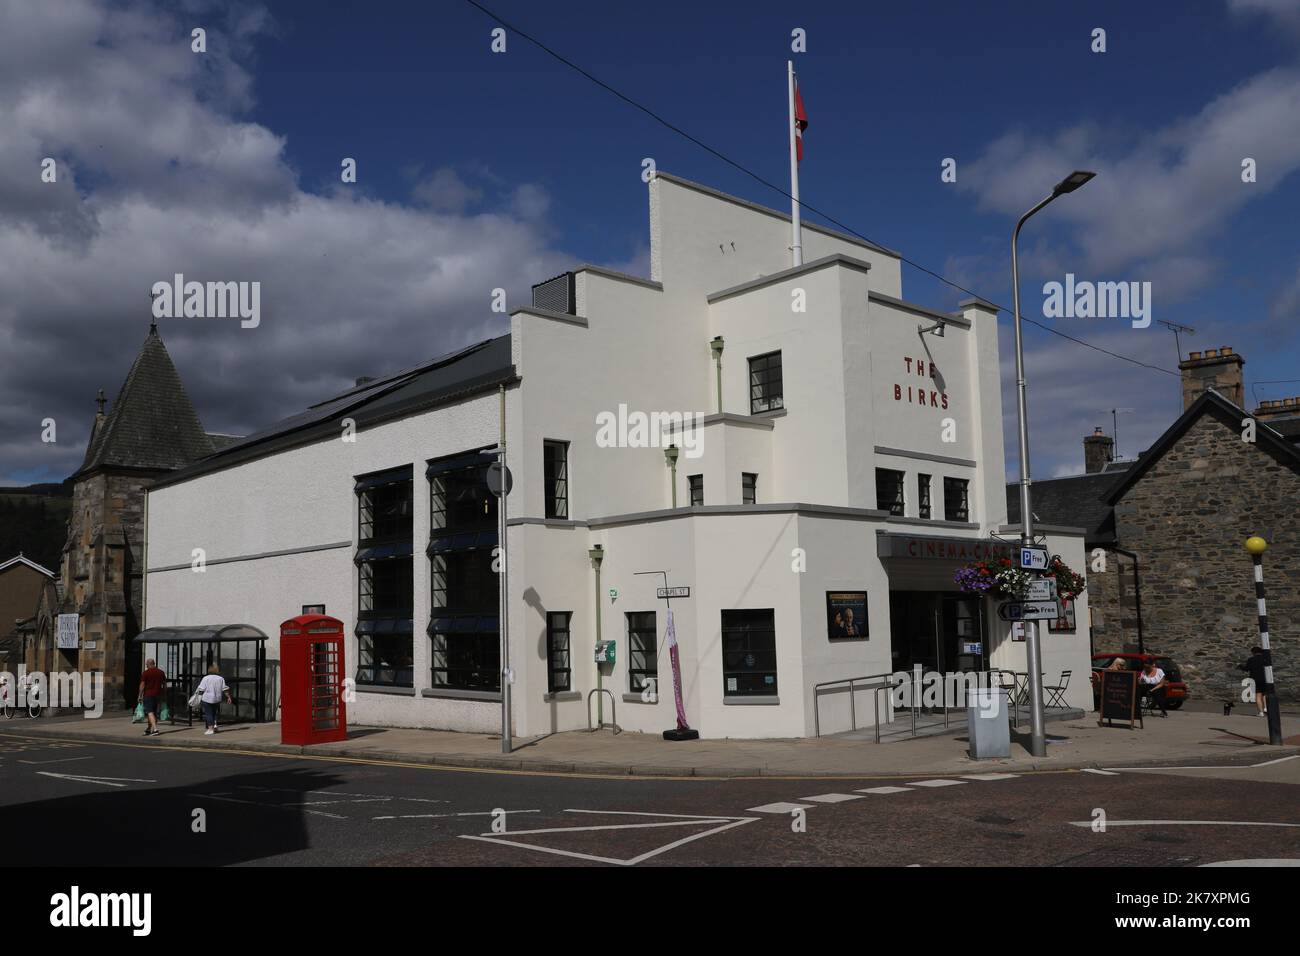 Exterior of The Birks Cinema Cafe Bar Aberfeldy Scotland August 2021 Stock Photo